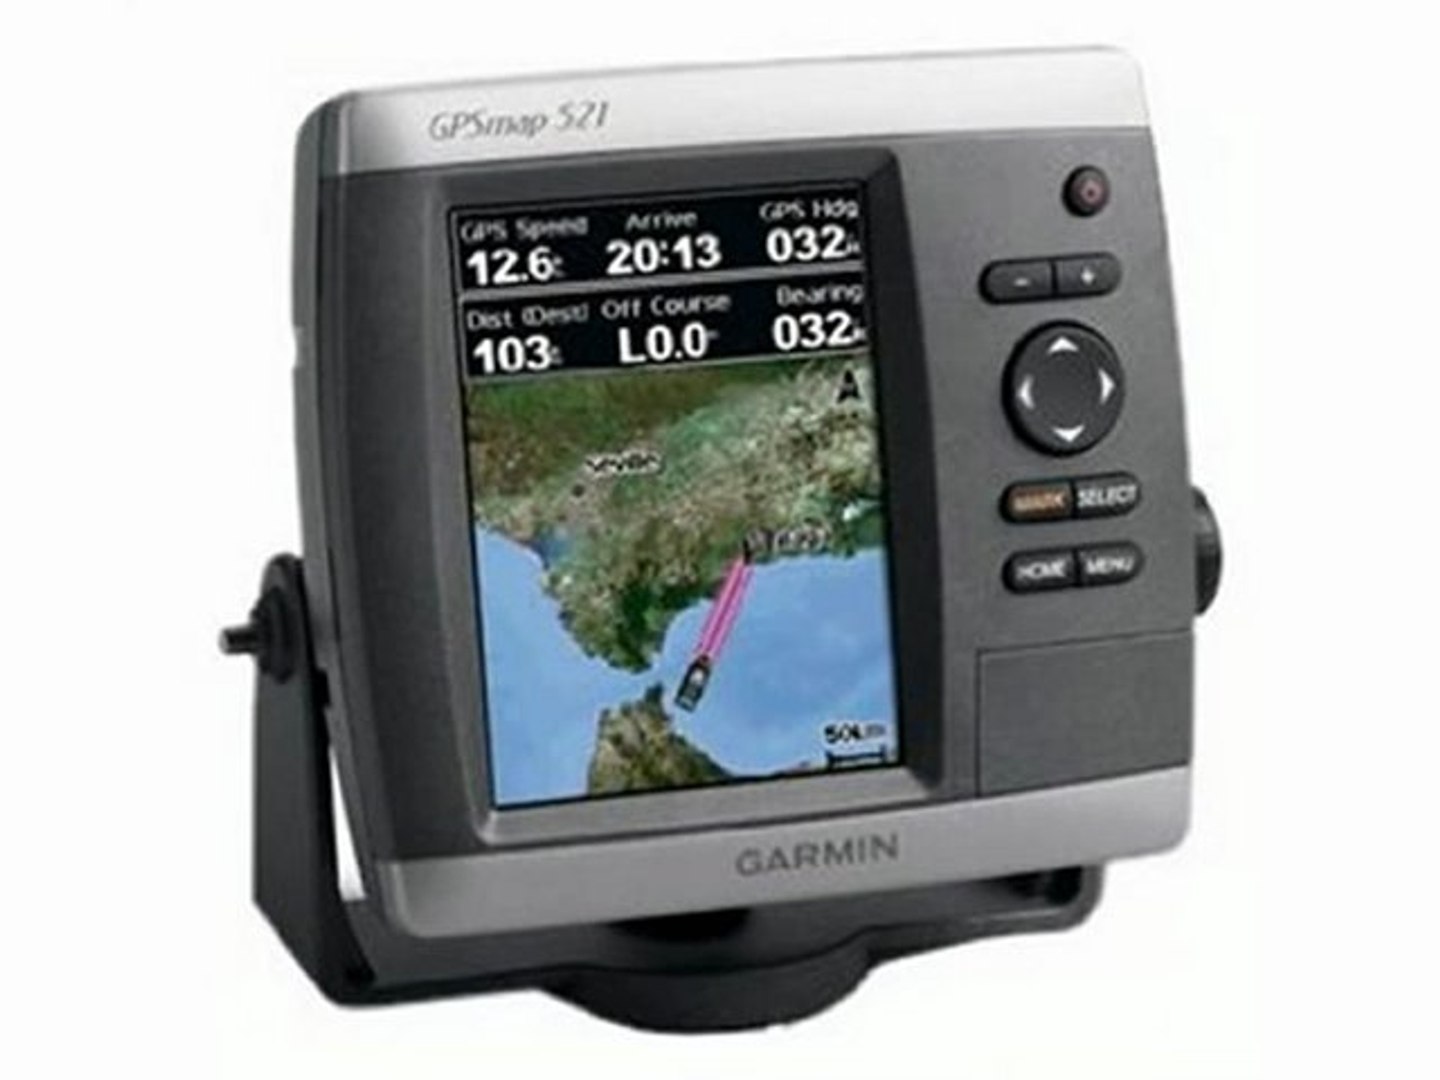 Garmin GPSMAP 521 - video Dailymotion